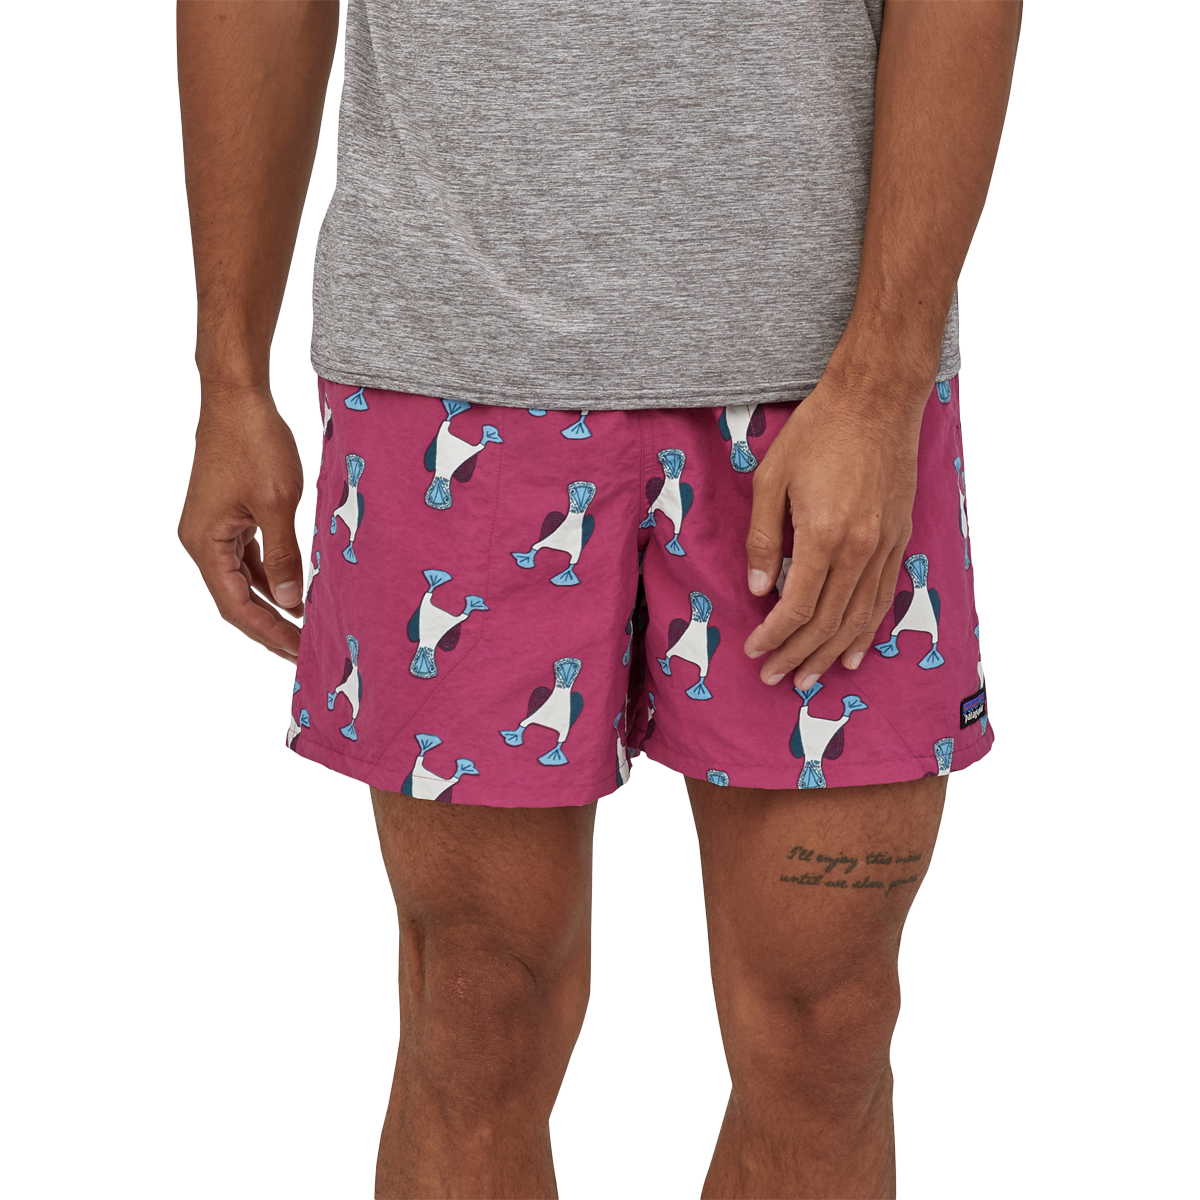 Men's Baggies Shorts 5